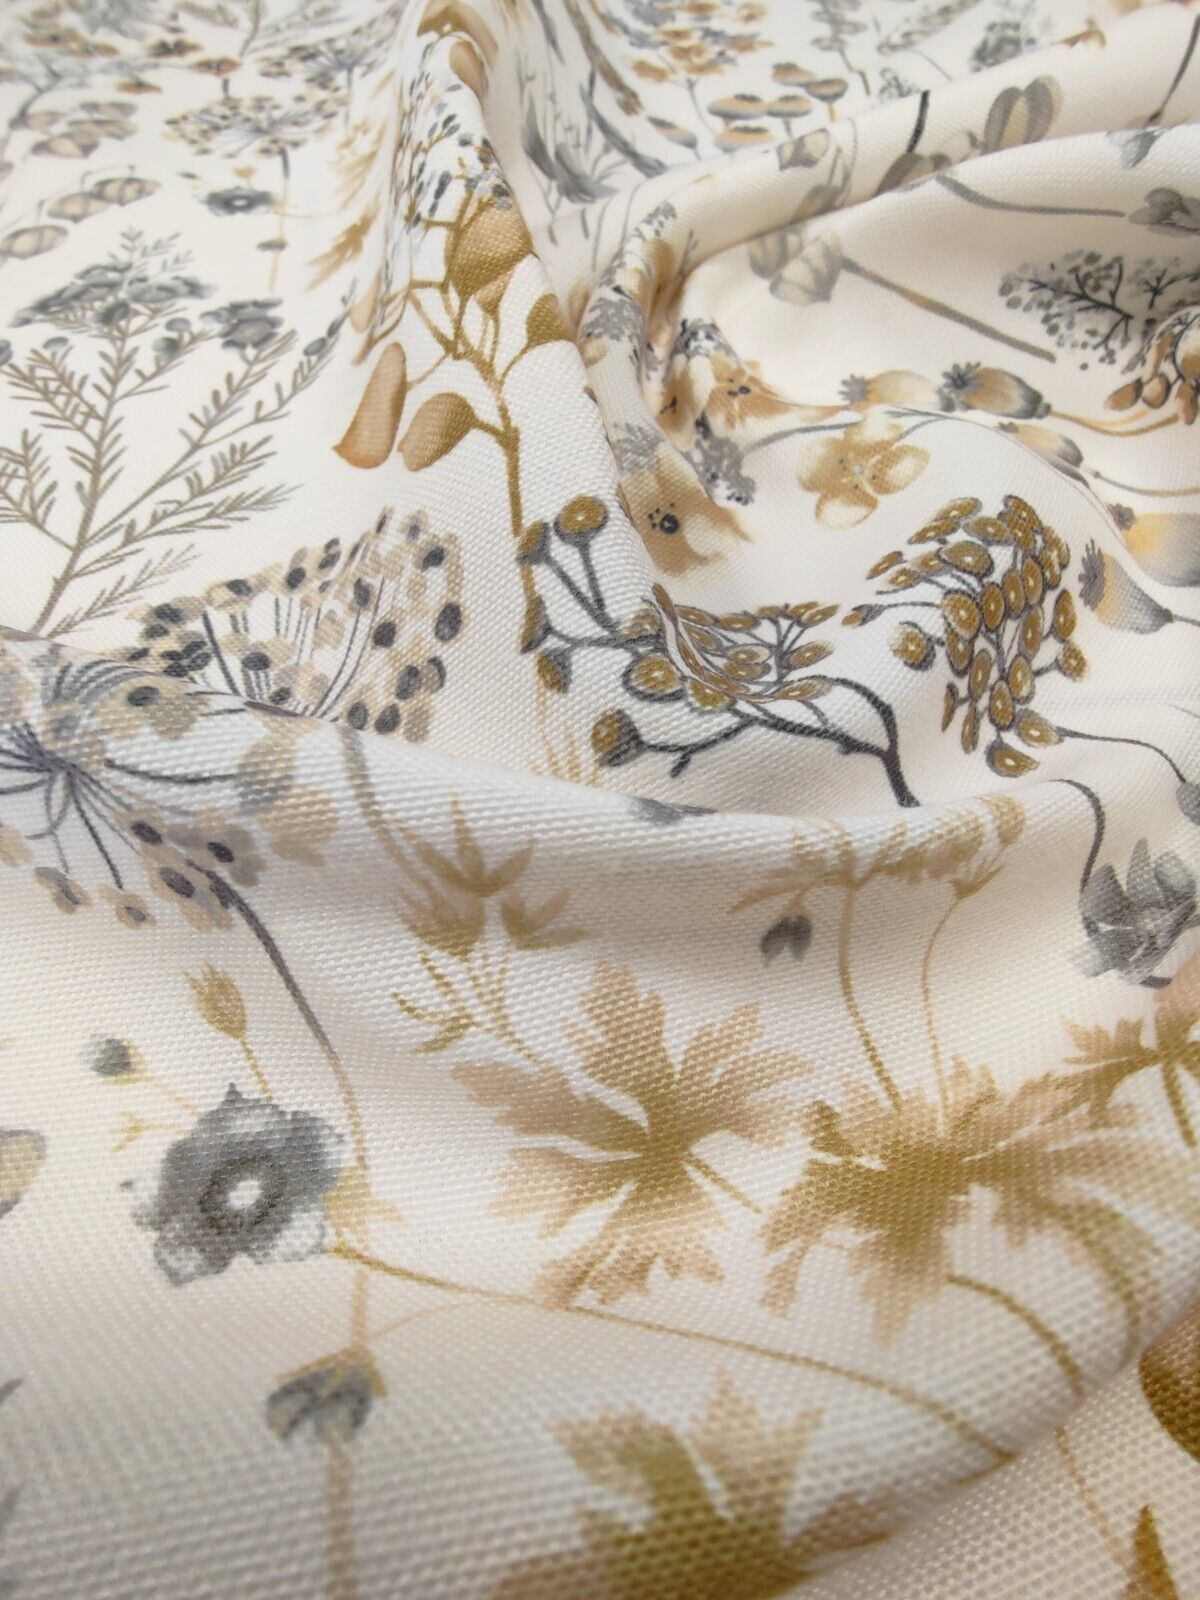 Edinburgh Weavers Woodstock Ochre Panama Curtain Upholstery Fabric By The Metre